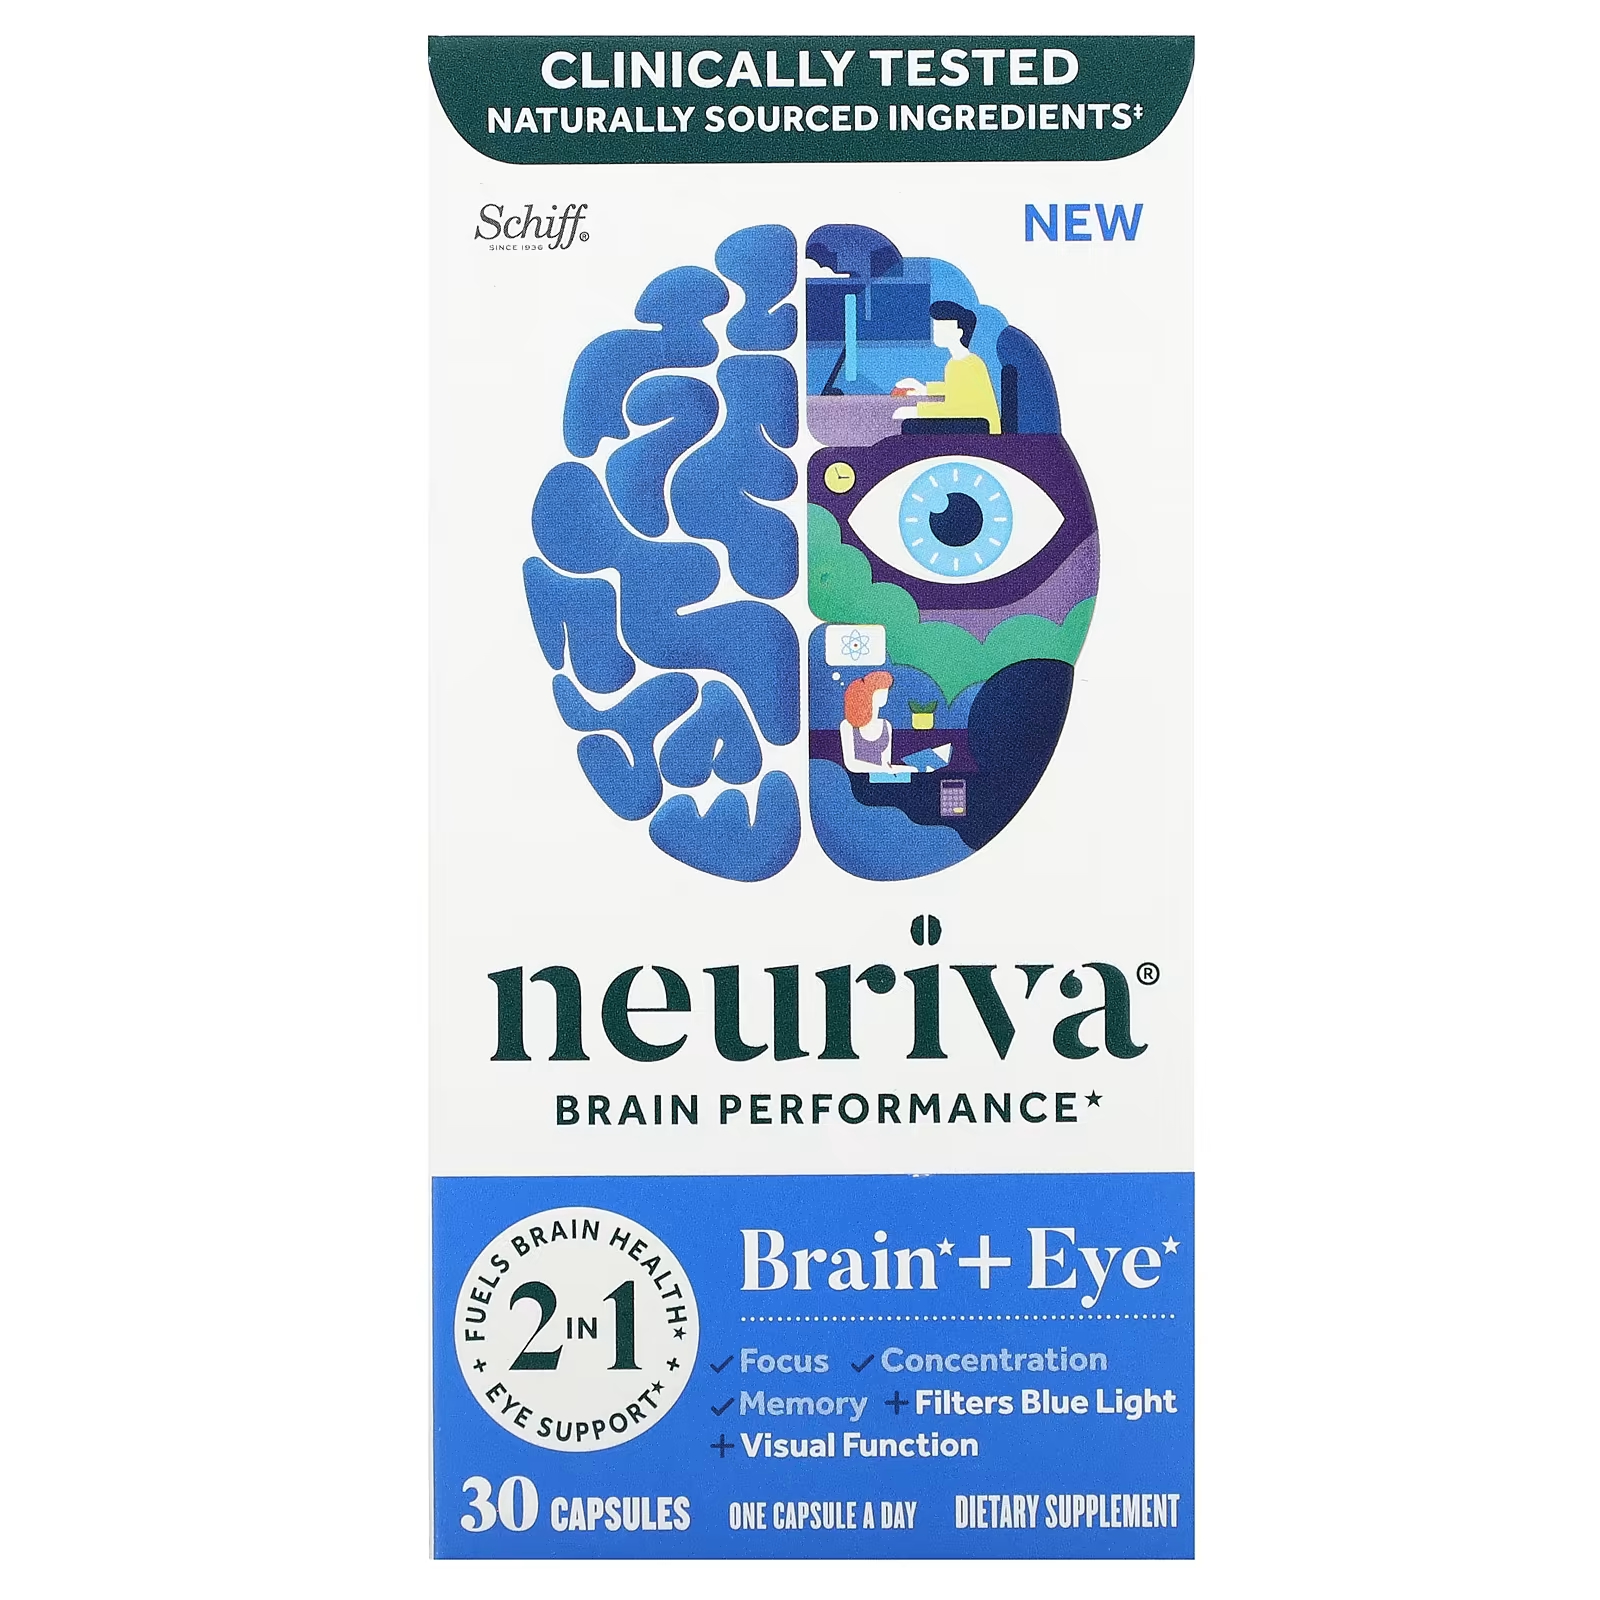 Мультивитамины Schiff Neuriva Brain Performance, 30 капсул цена и фото